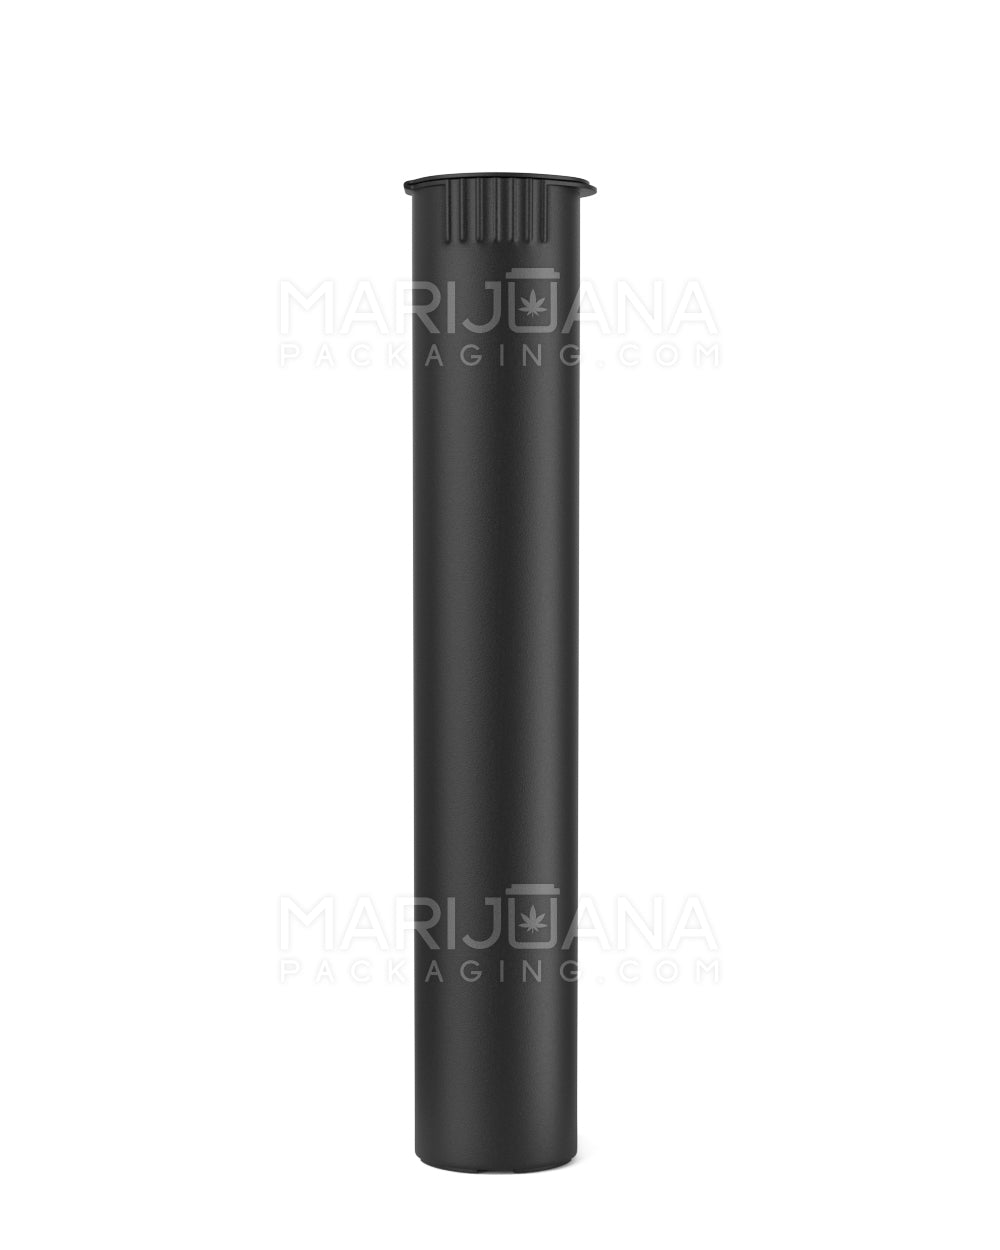 Child Resistant | King Size Pop Top Opaque Plastic Pre-Roll Tubes | 116mm - Matte Black - 500 Count